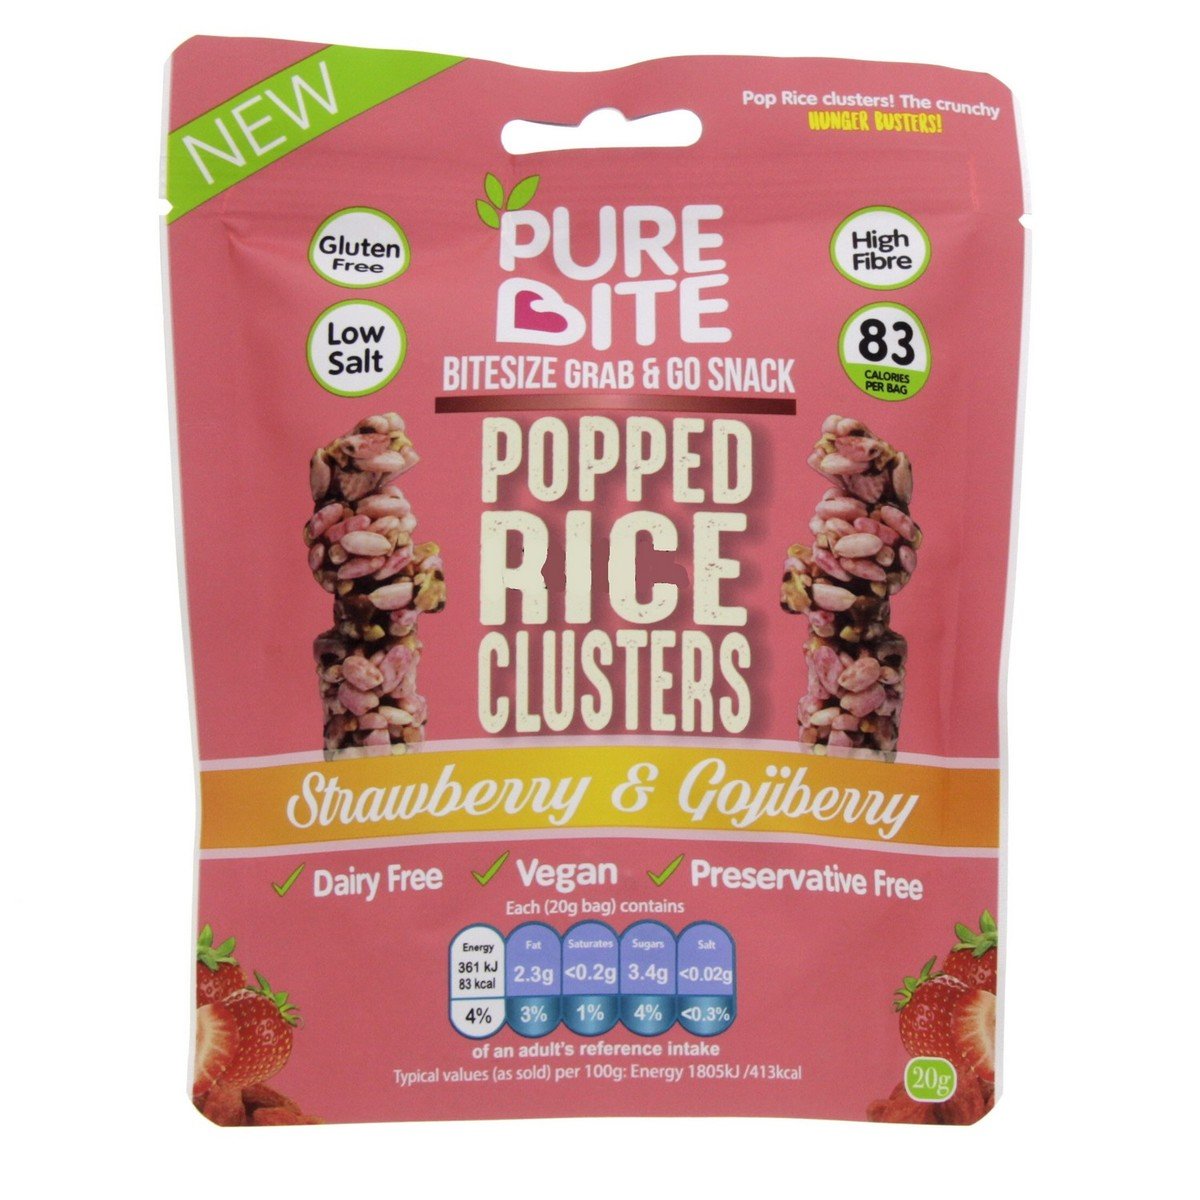 Pure Bite Popped Rice Clusters Strawberry & Goji Berry Gluten Free 20 g